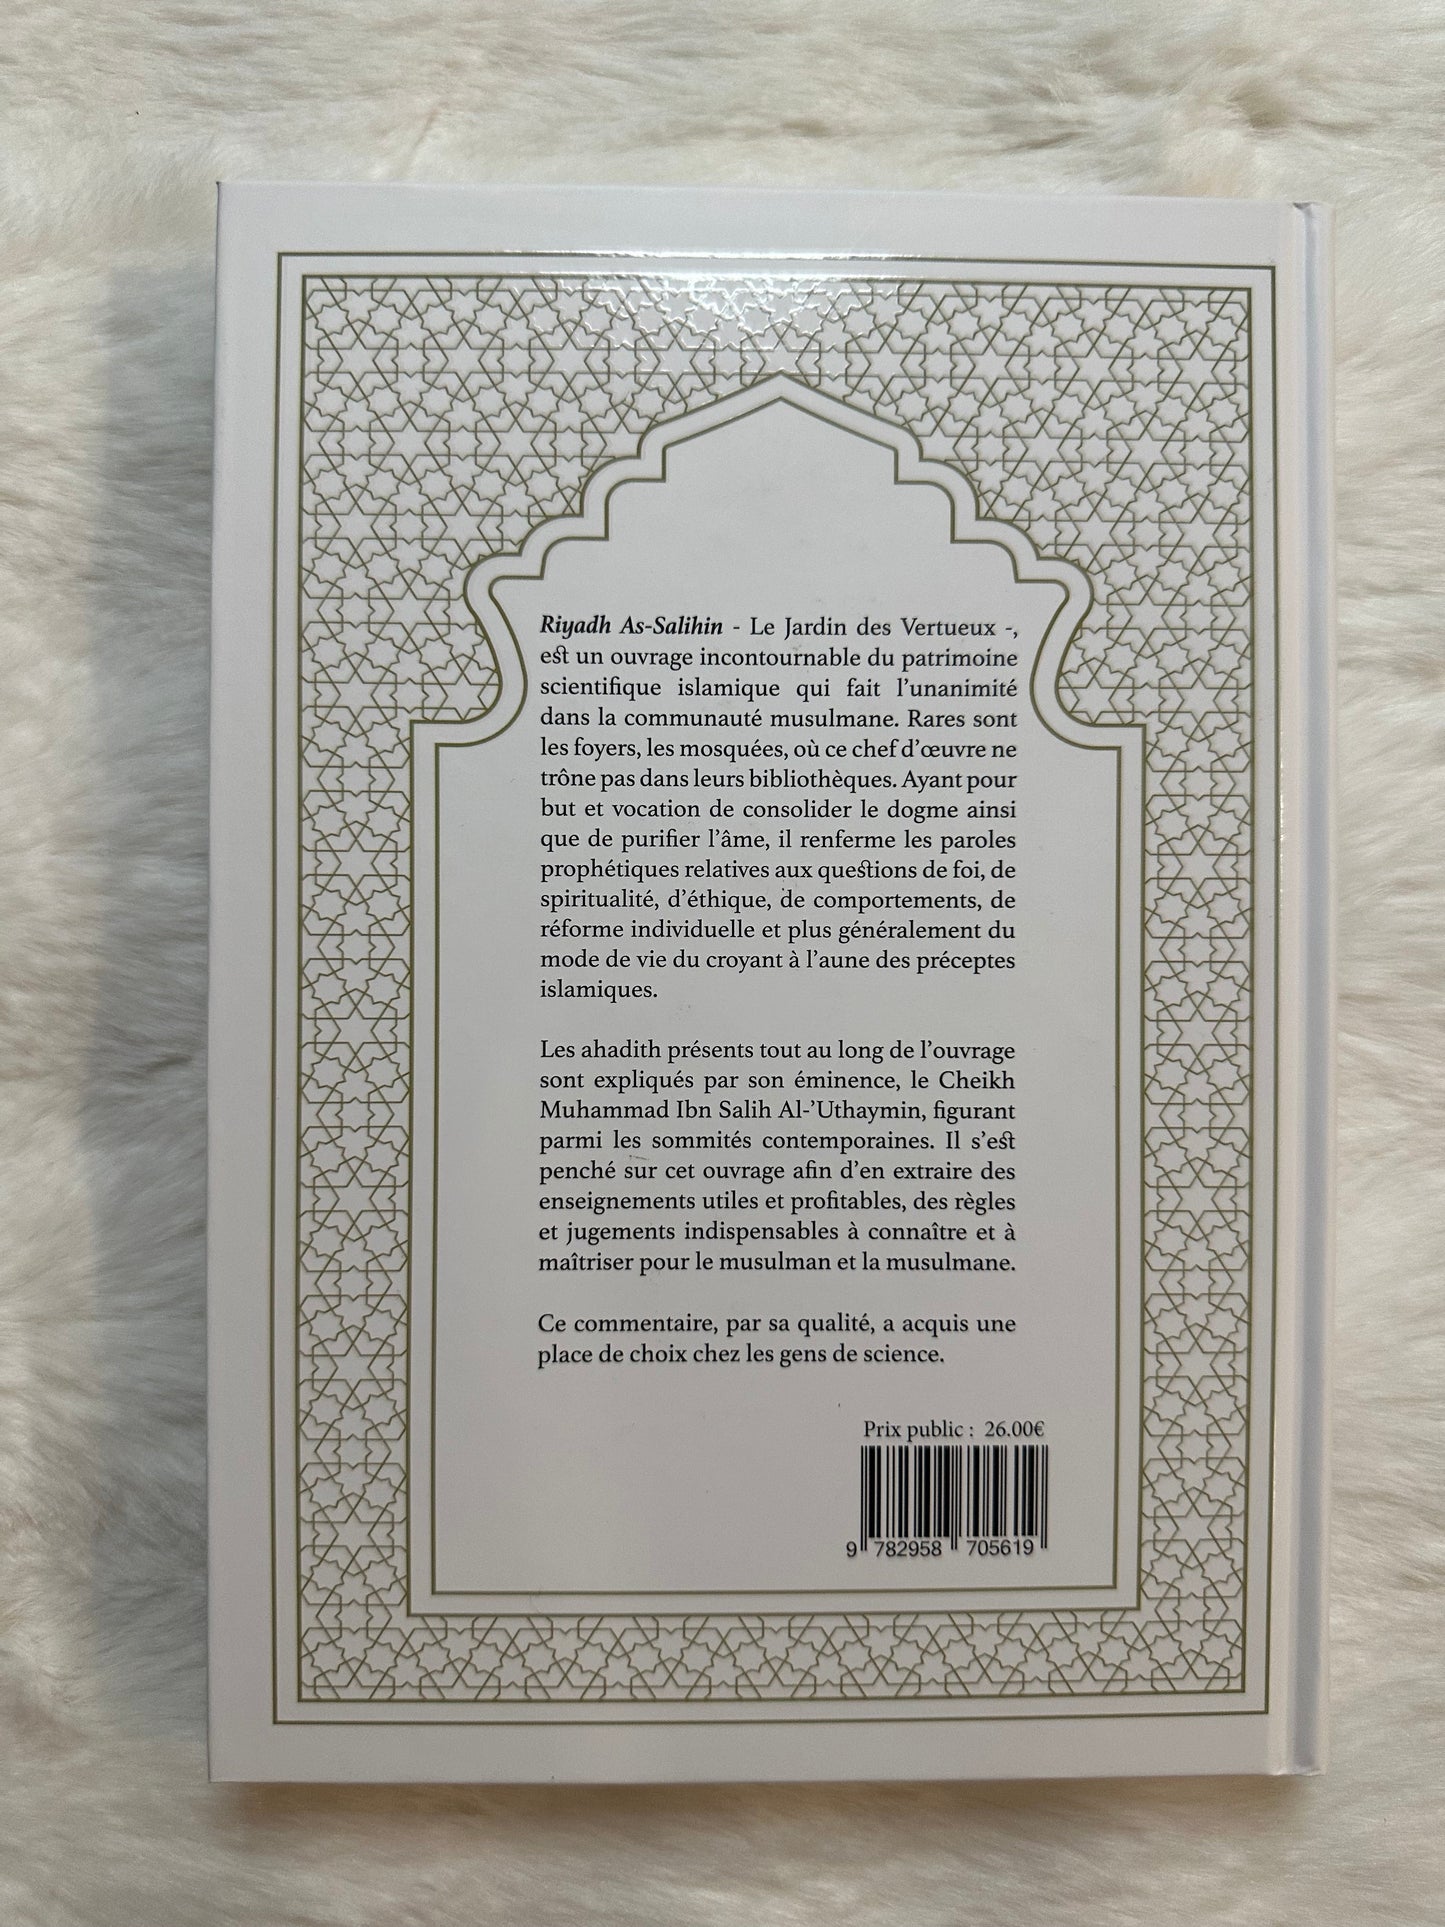 L'Explication De Riyadh As-Salihin (Volume 2)